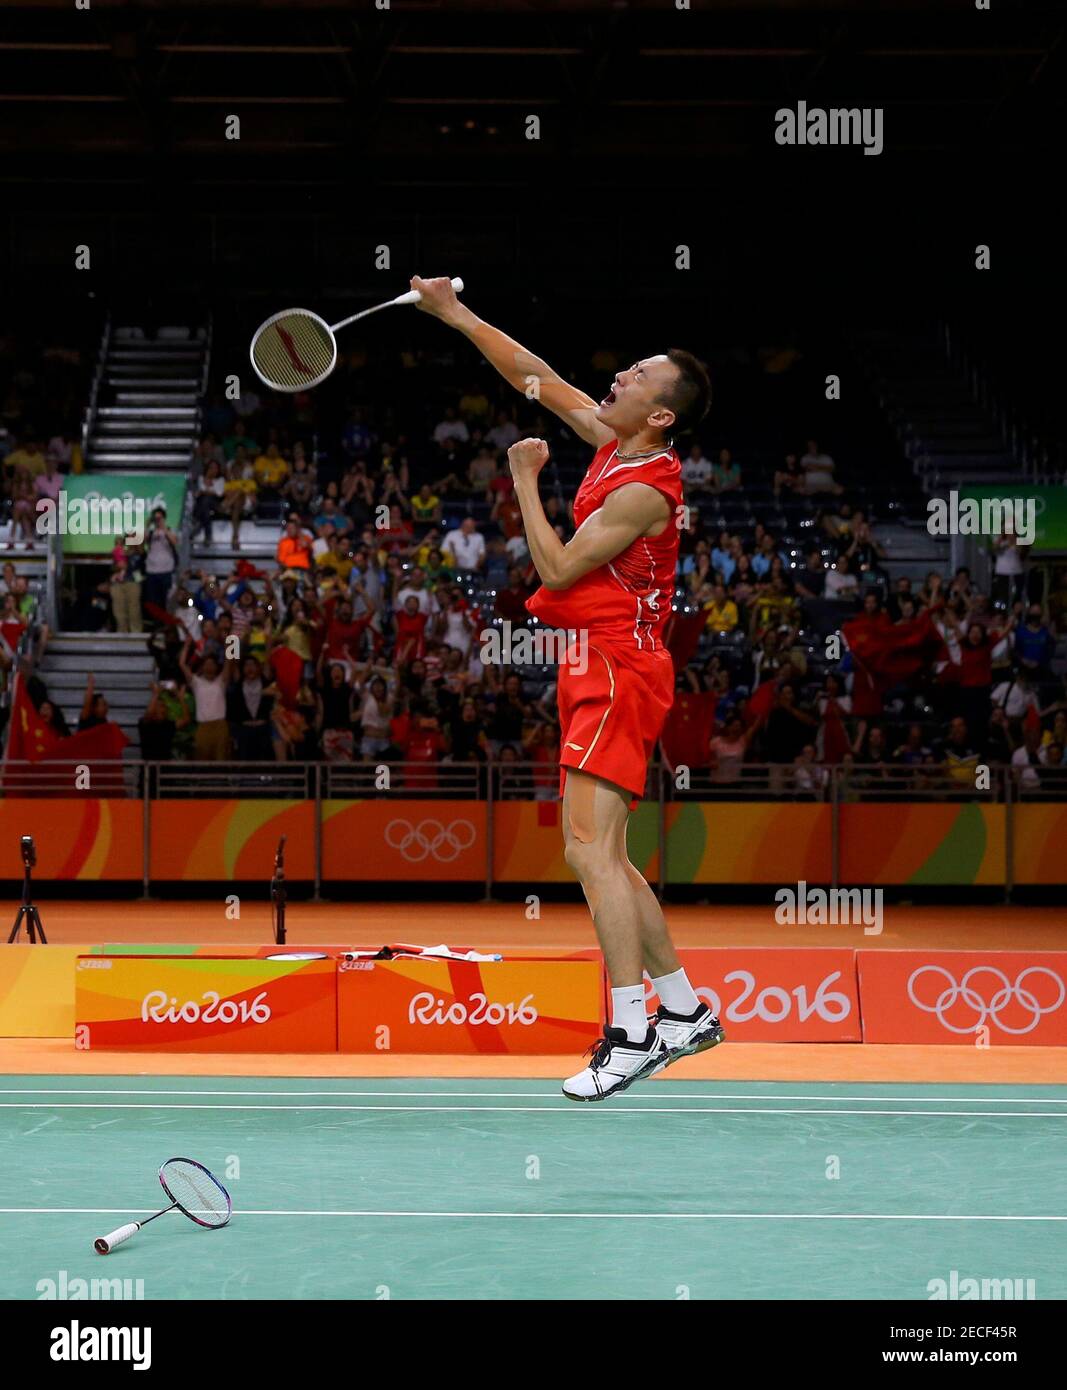 2016 Rio Olympics - Badminton - Men's Doubles Gold Medal Match - Riocentro  - Pavilion 4 - Rio de Janeiro, Brazil - 19/08/2016. Zhang Nan (CHN) of  China celebrates after winning his